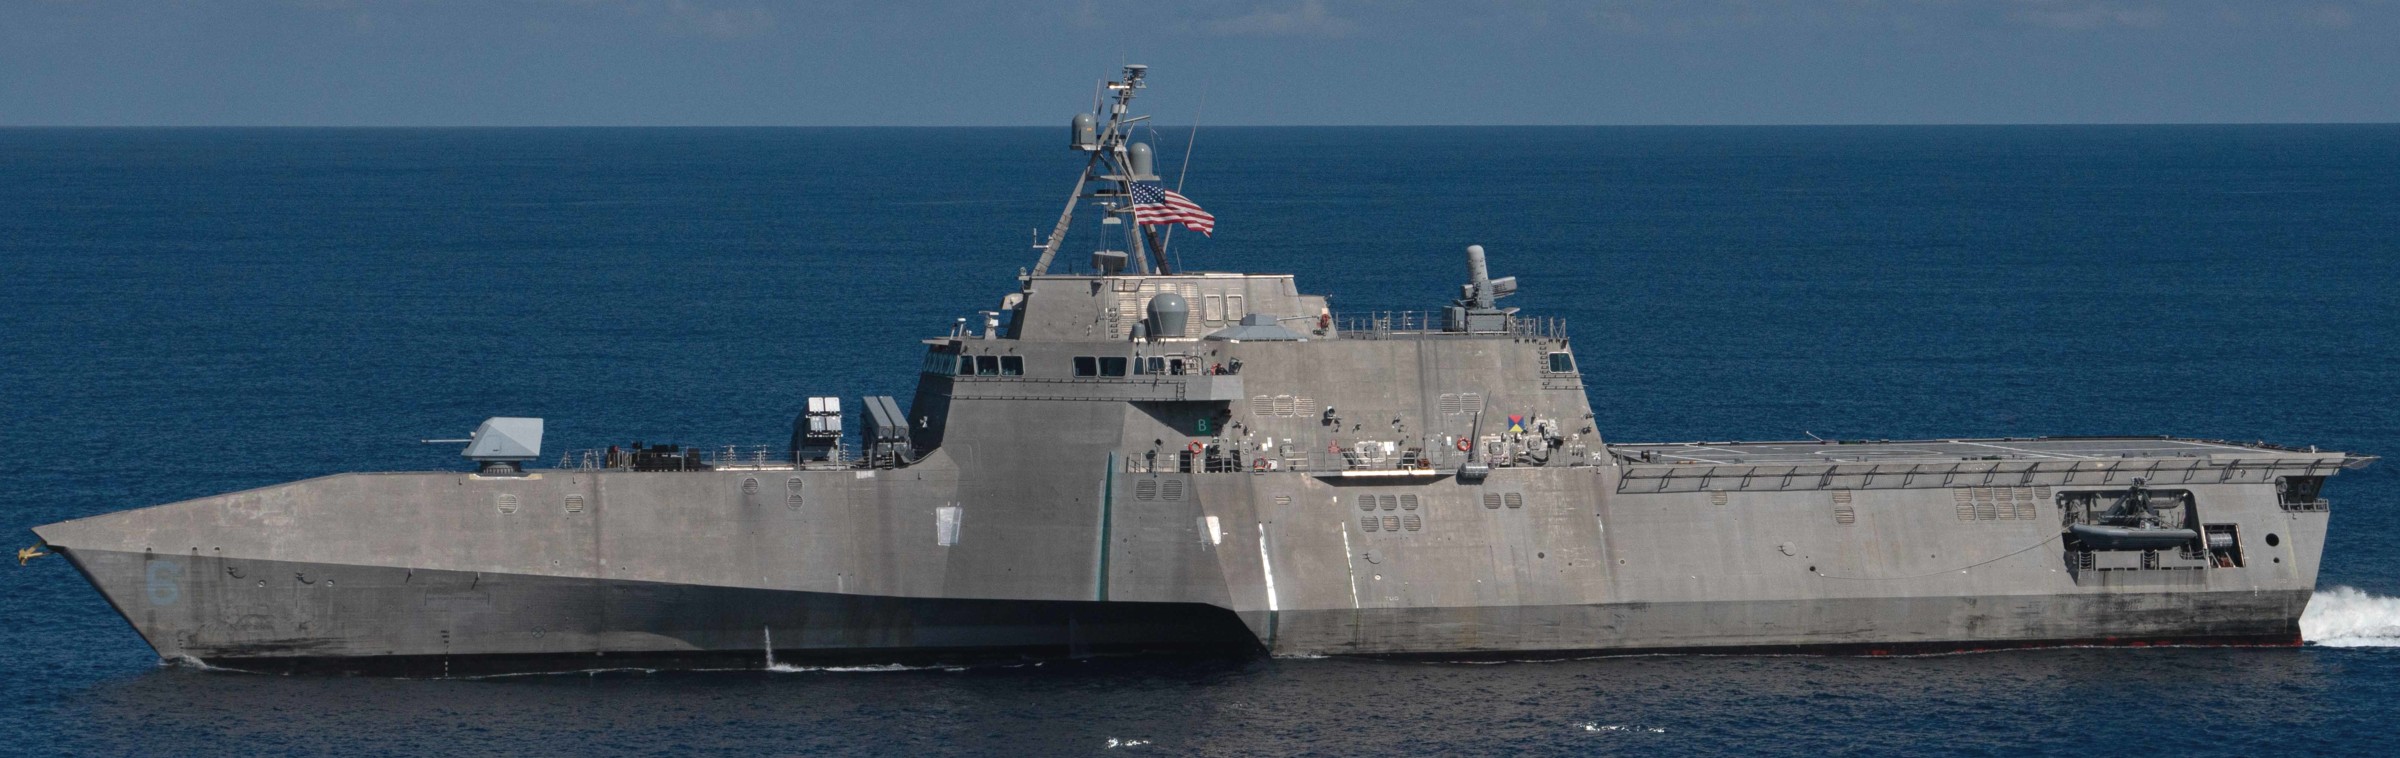 lcs-6 uss jackson independence class littoral combat ship us navy 40